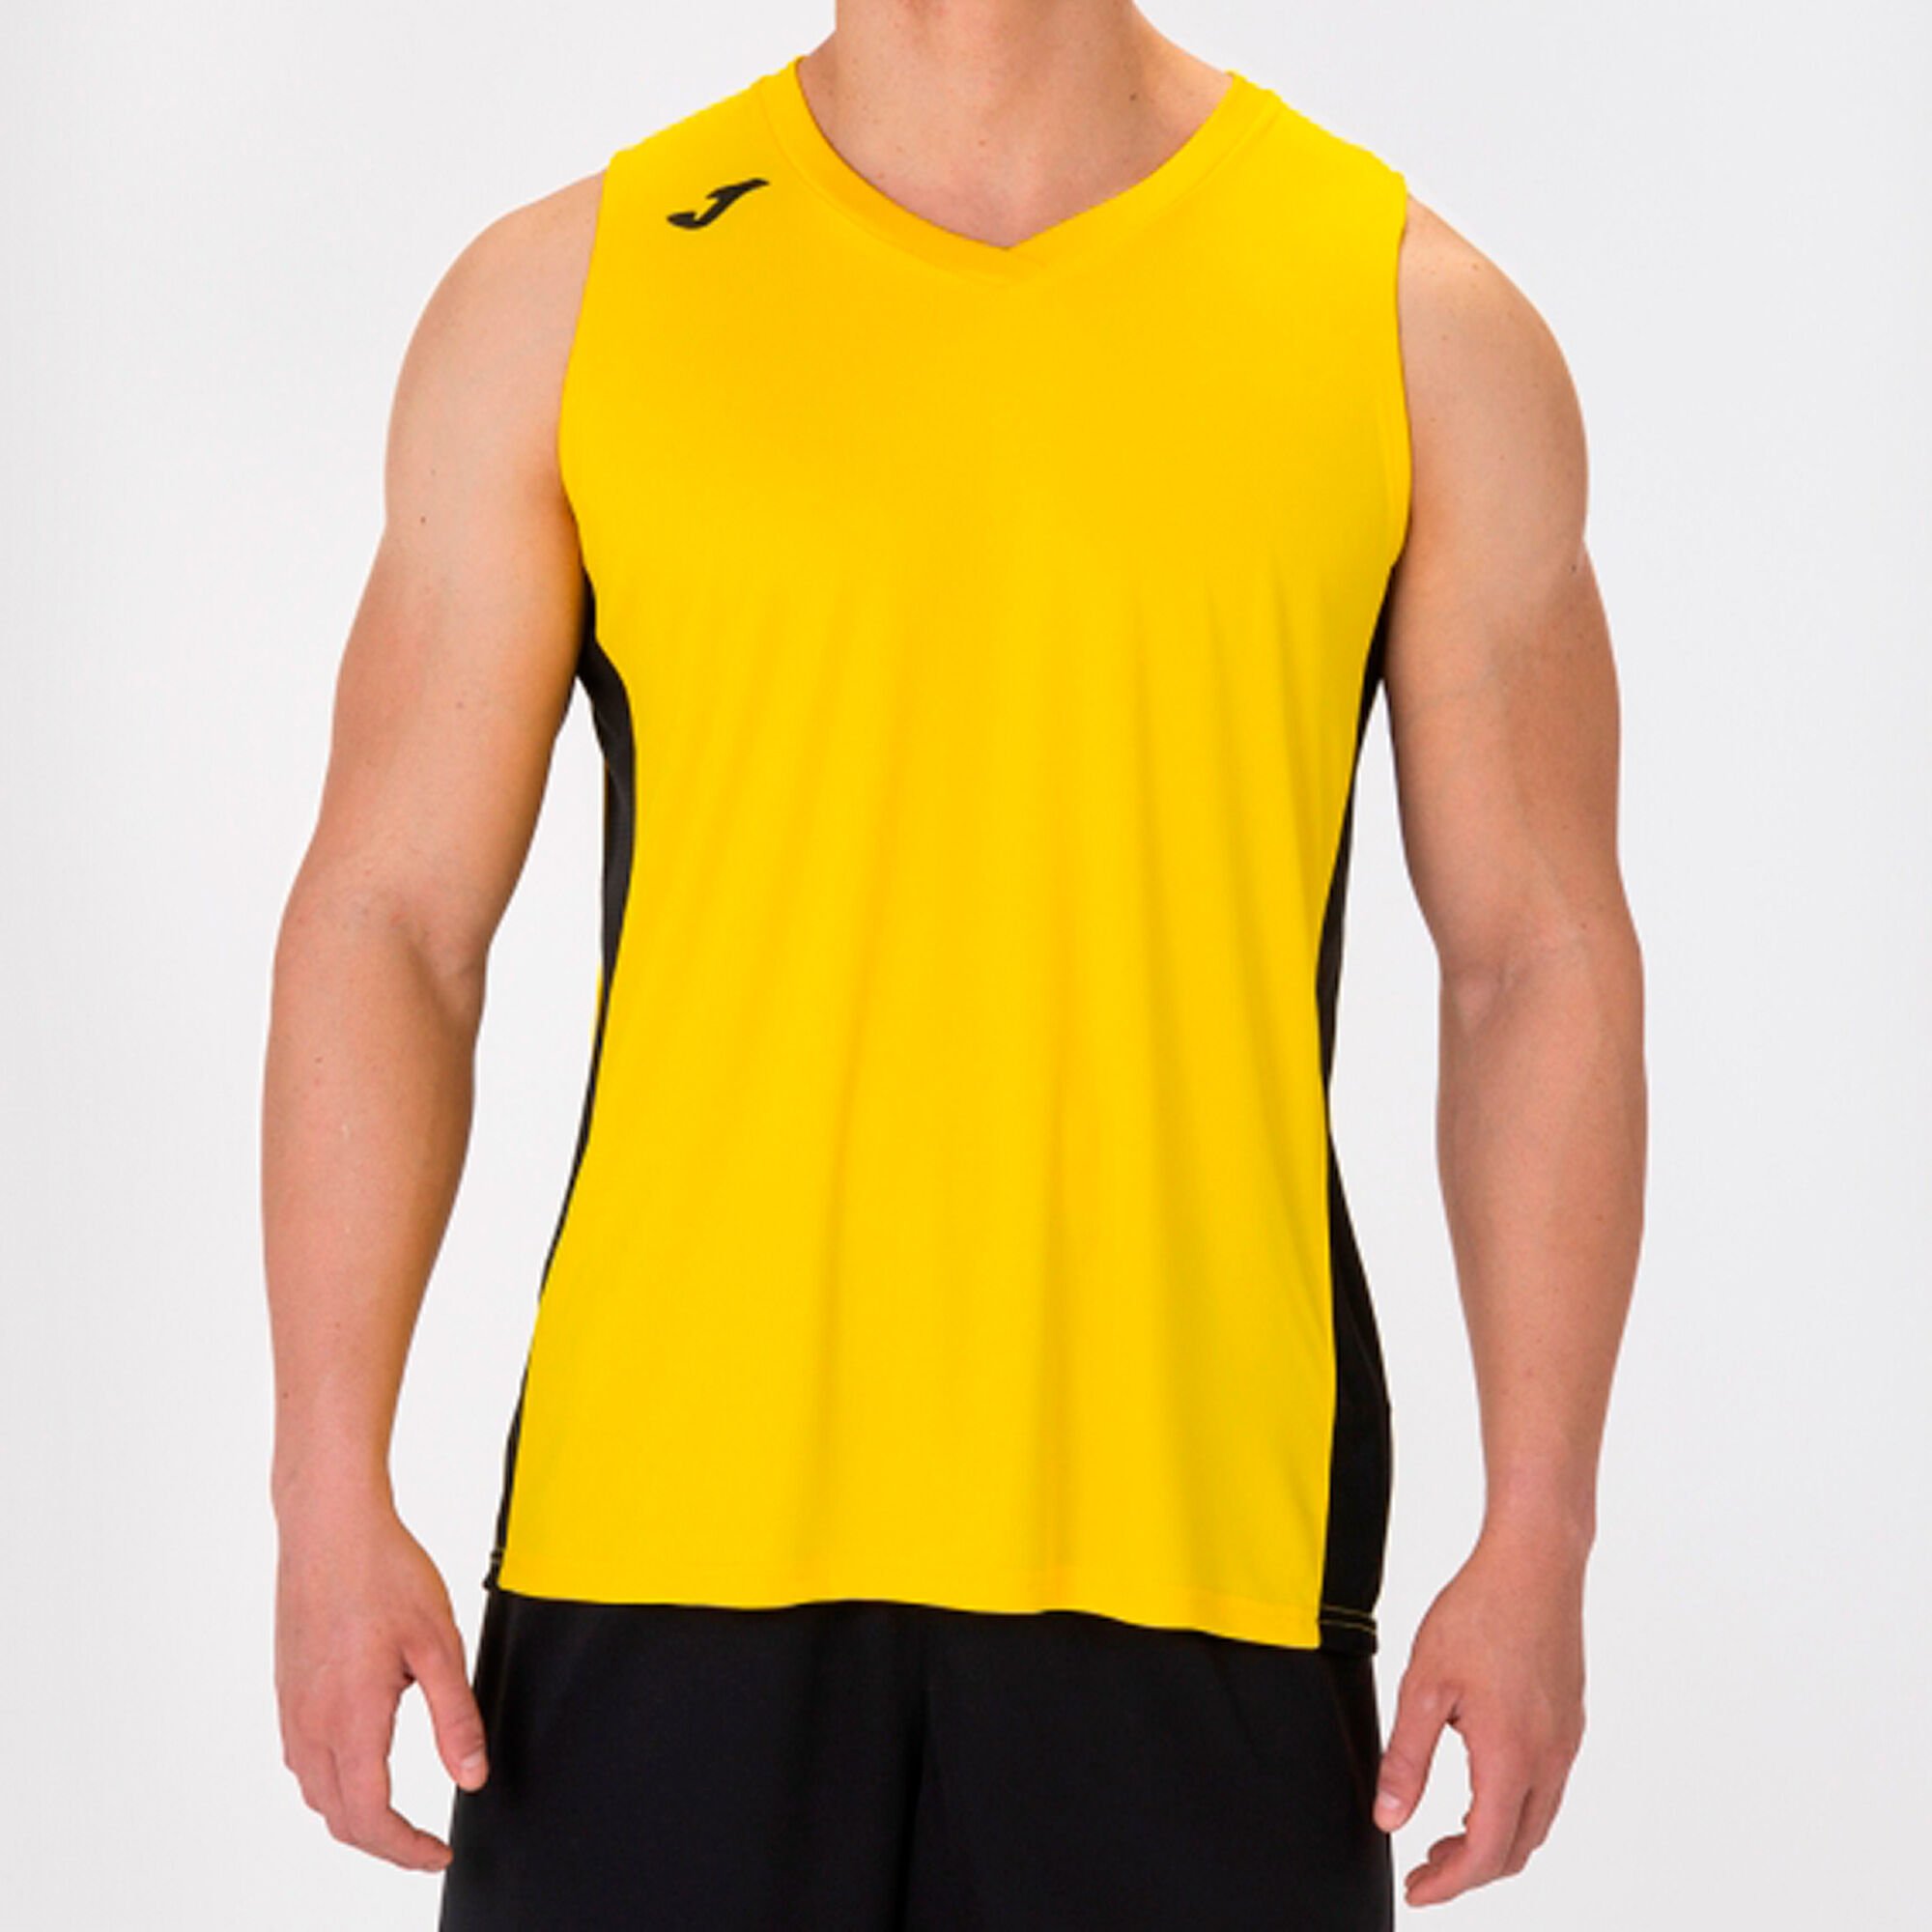 Camiseta sin mangas hombre Cancha III amarillo negro